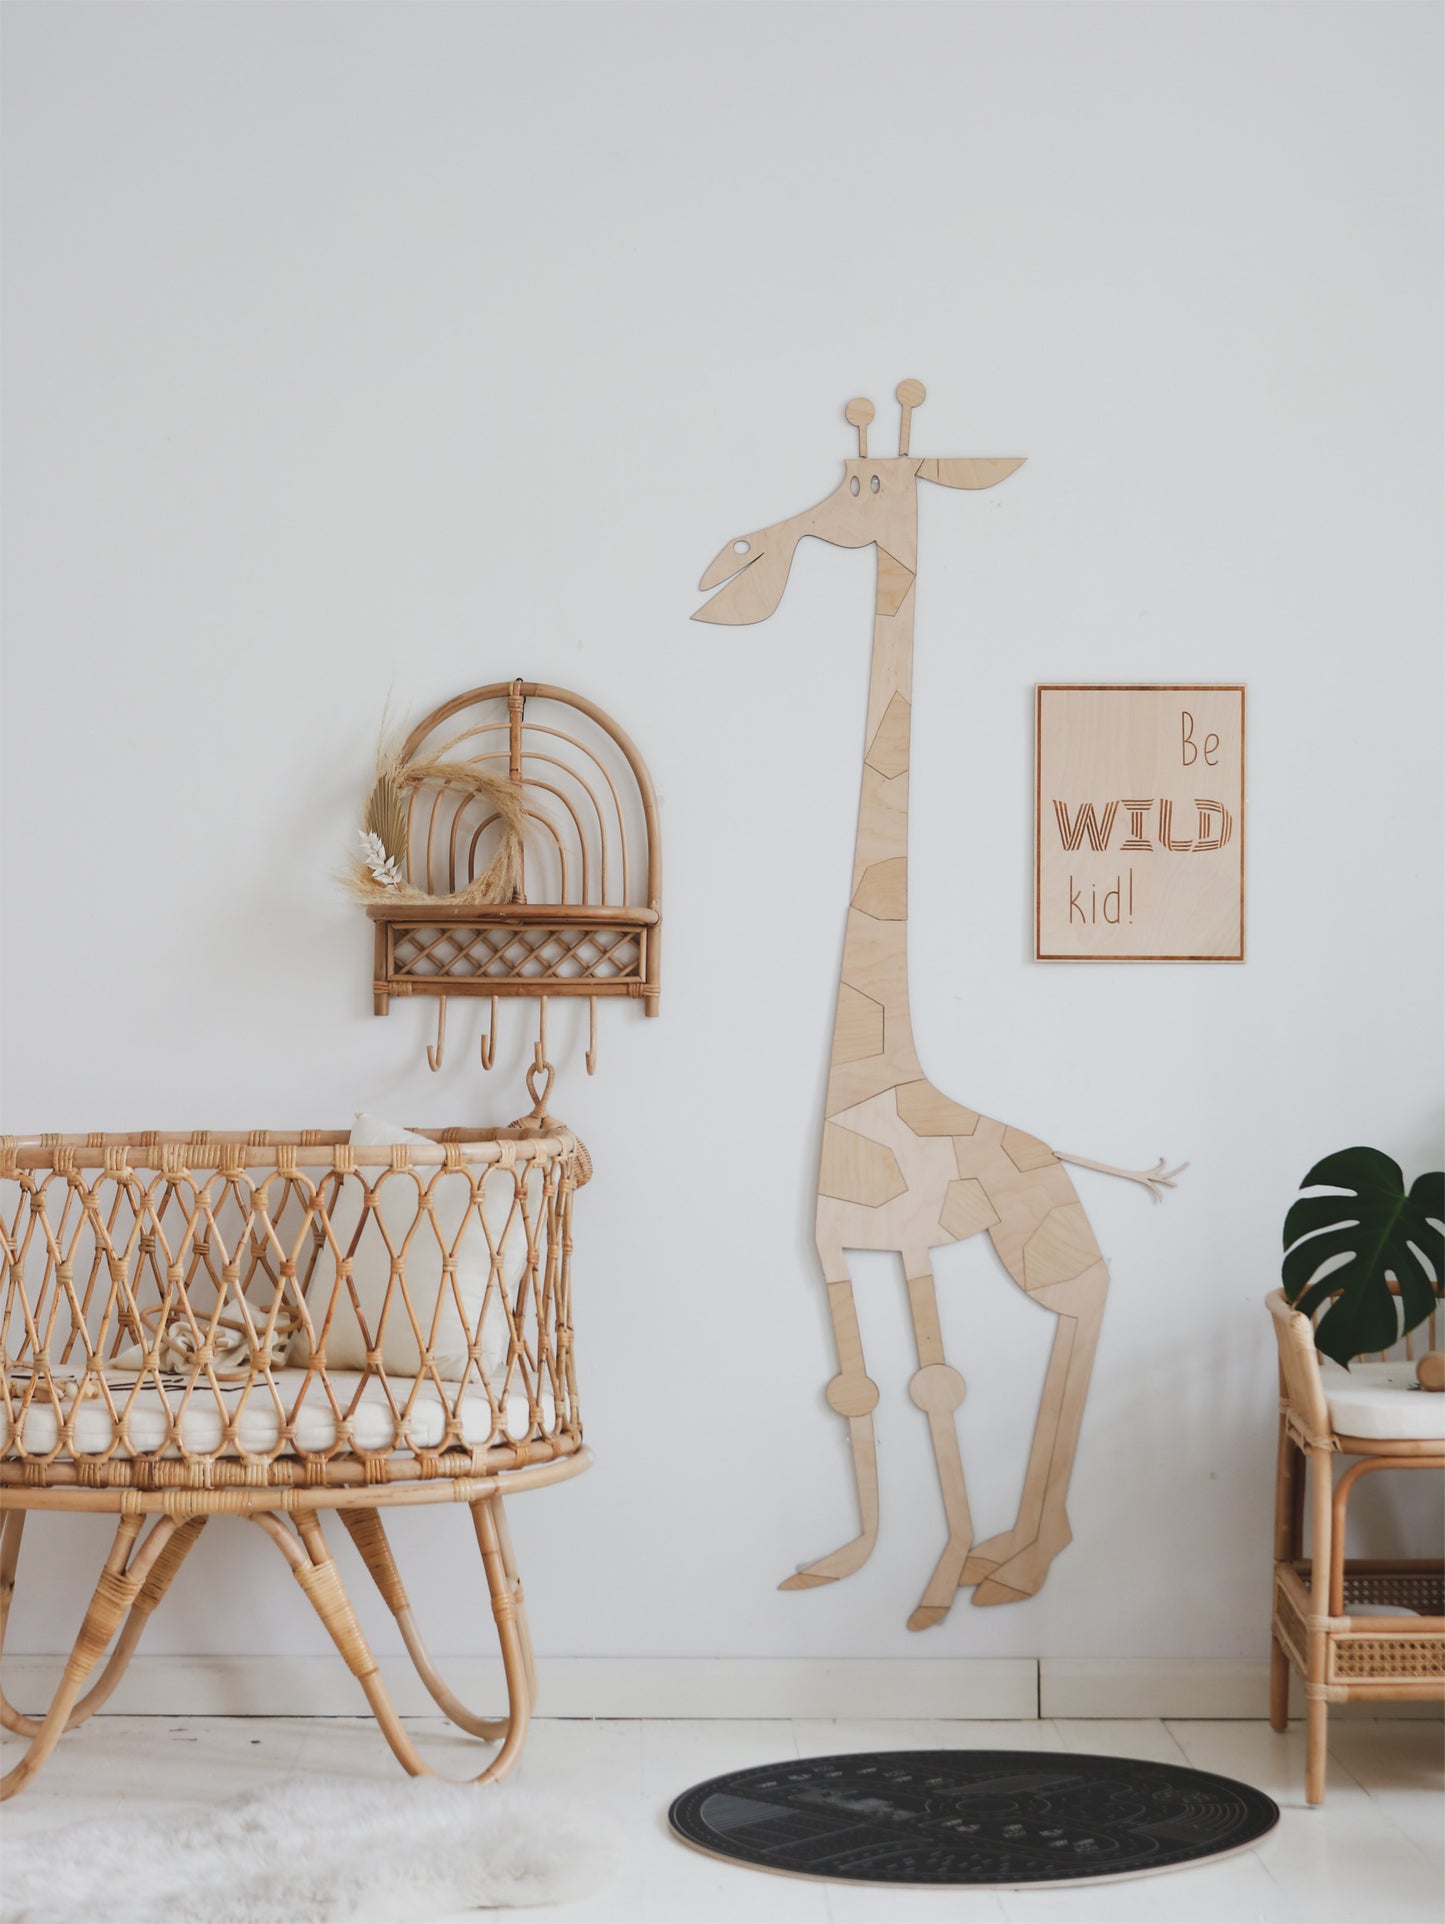 Wooden Safari Origami Wall Decoration - Giraffe